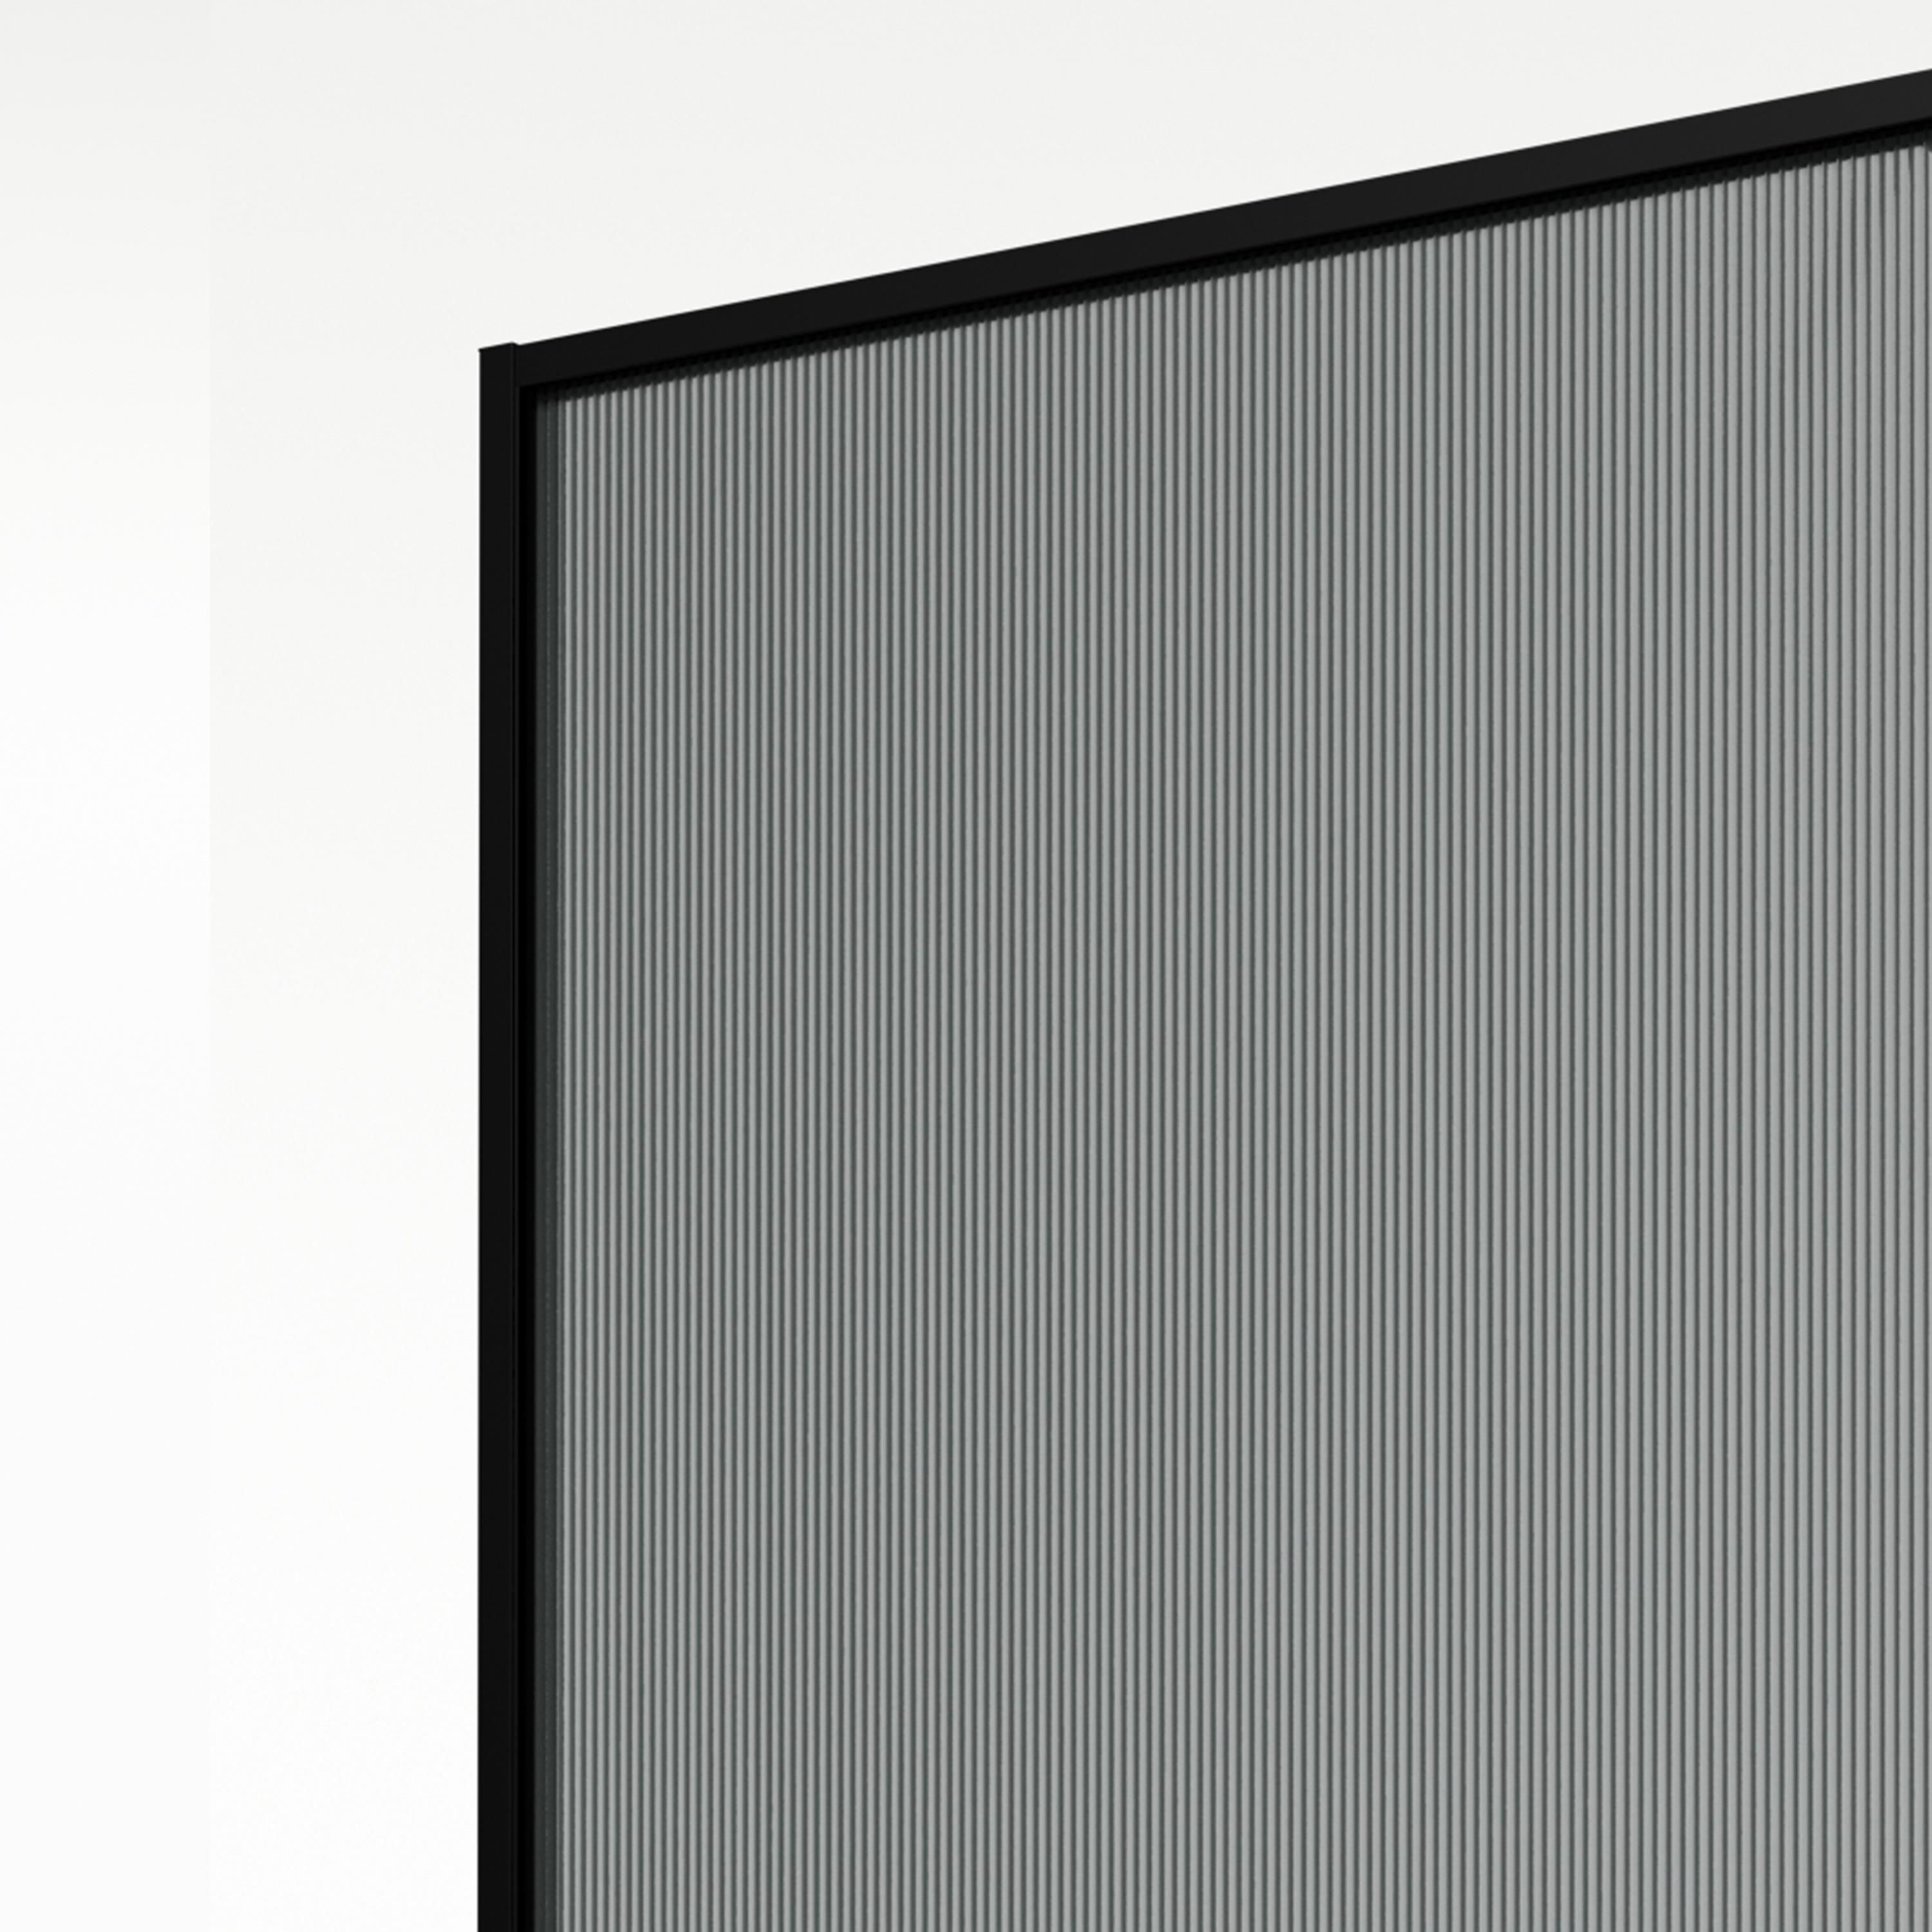 Aqualux AQ PRO Matt Black Fluted Single Wet room glass screen (H)200cm (W)120cm